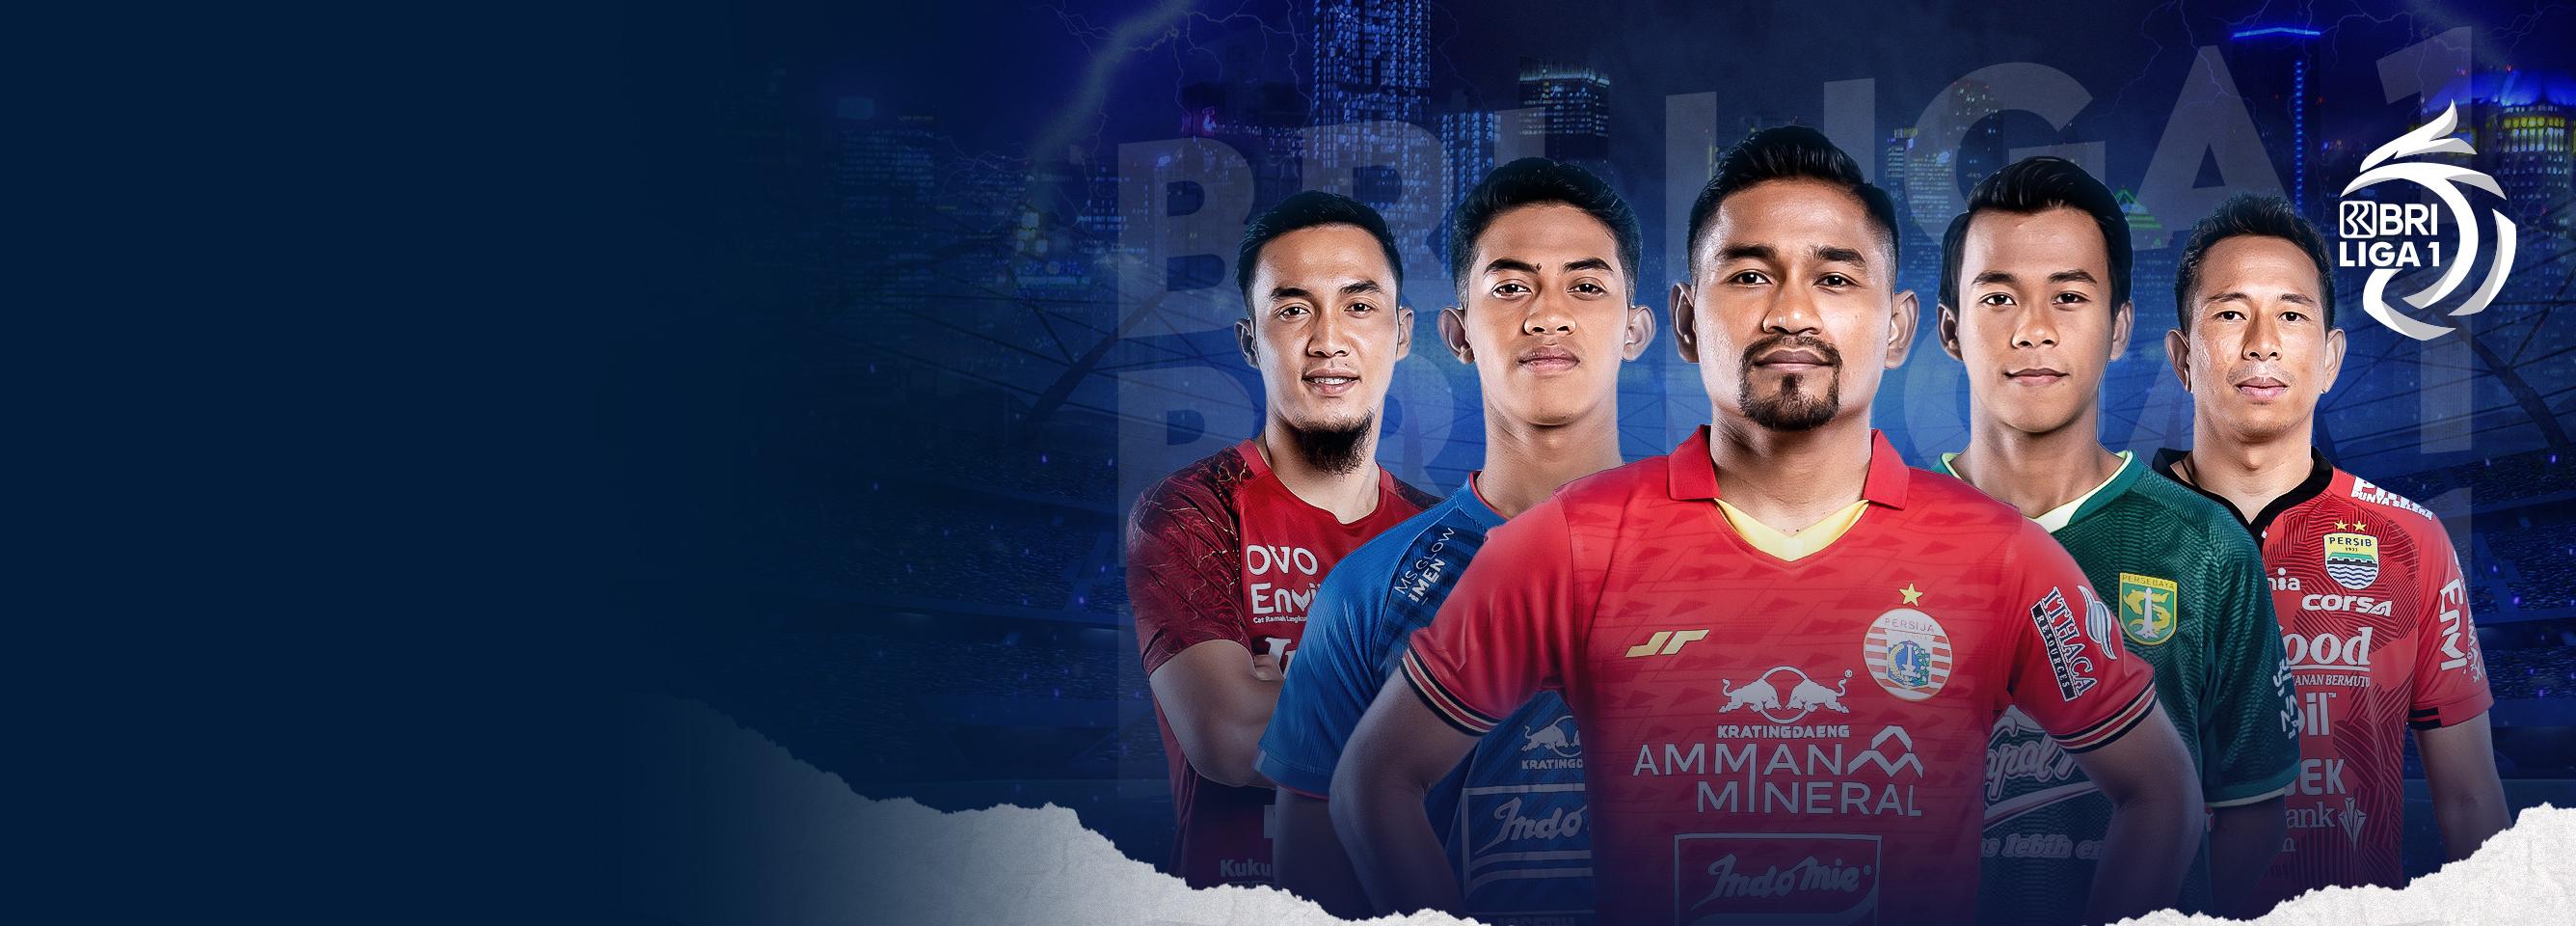 BRI Liga 1 2021 - Highlights & Live Streaming | Vidio